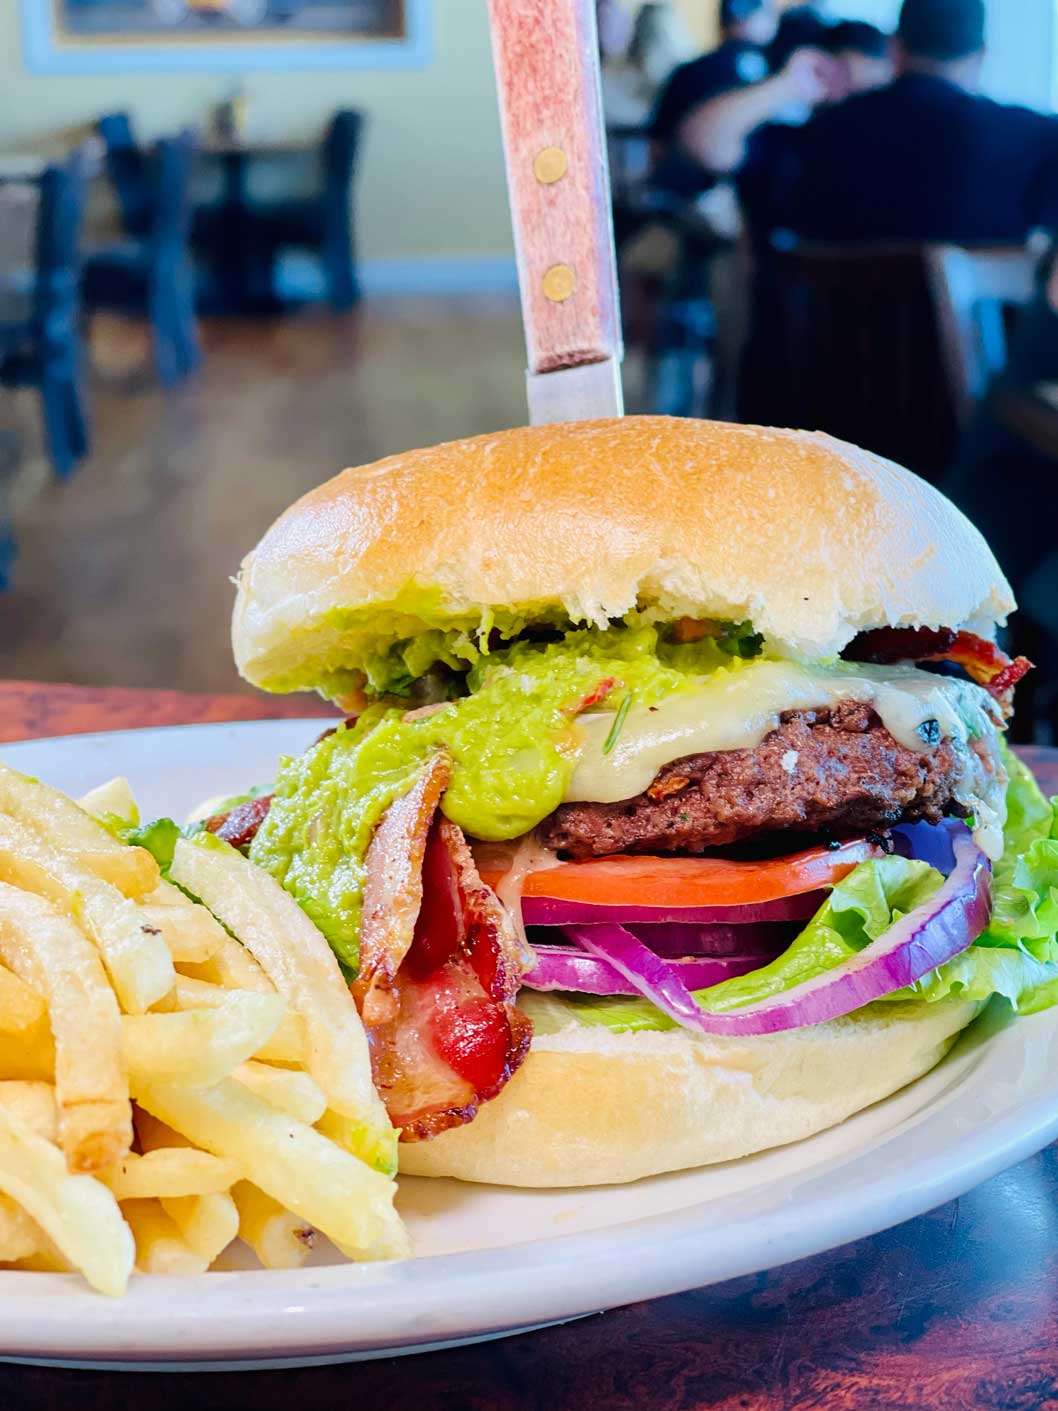 Woodies Café Lunch & Dinner Menu – California Burger